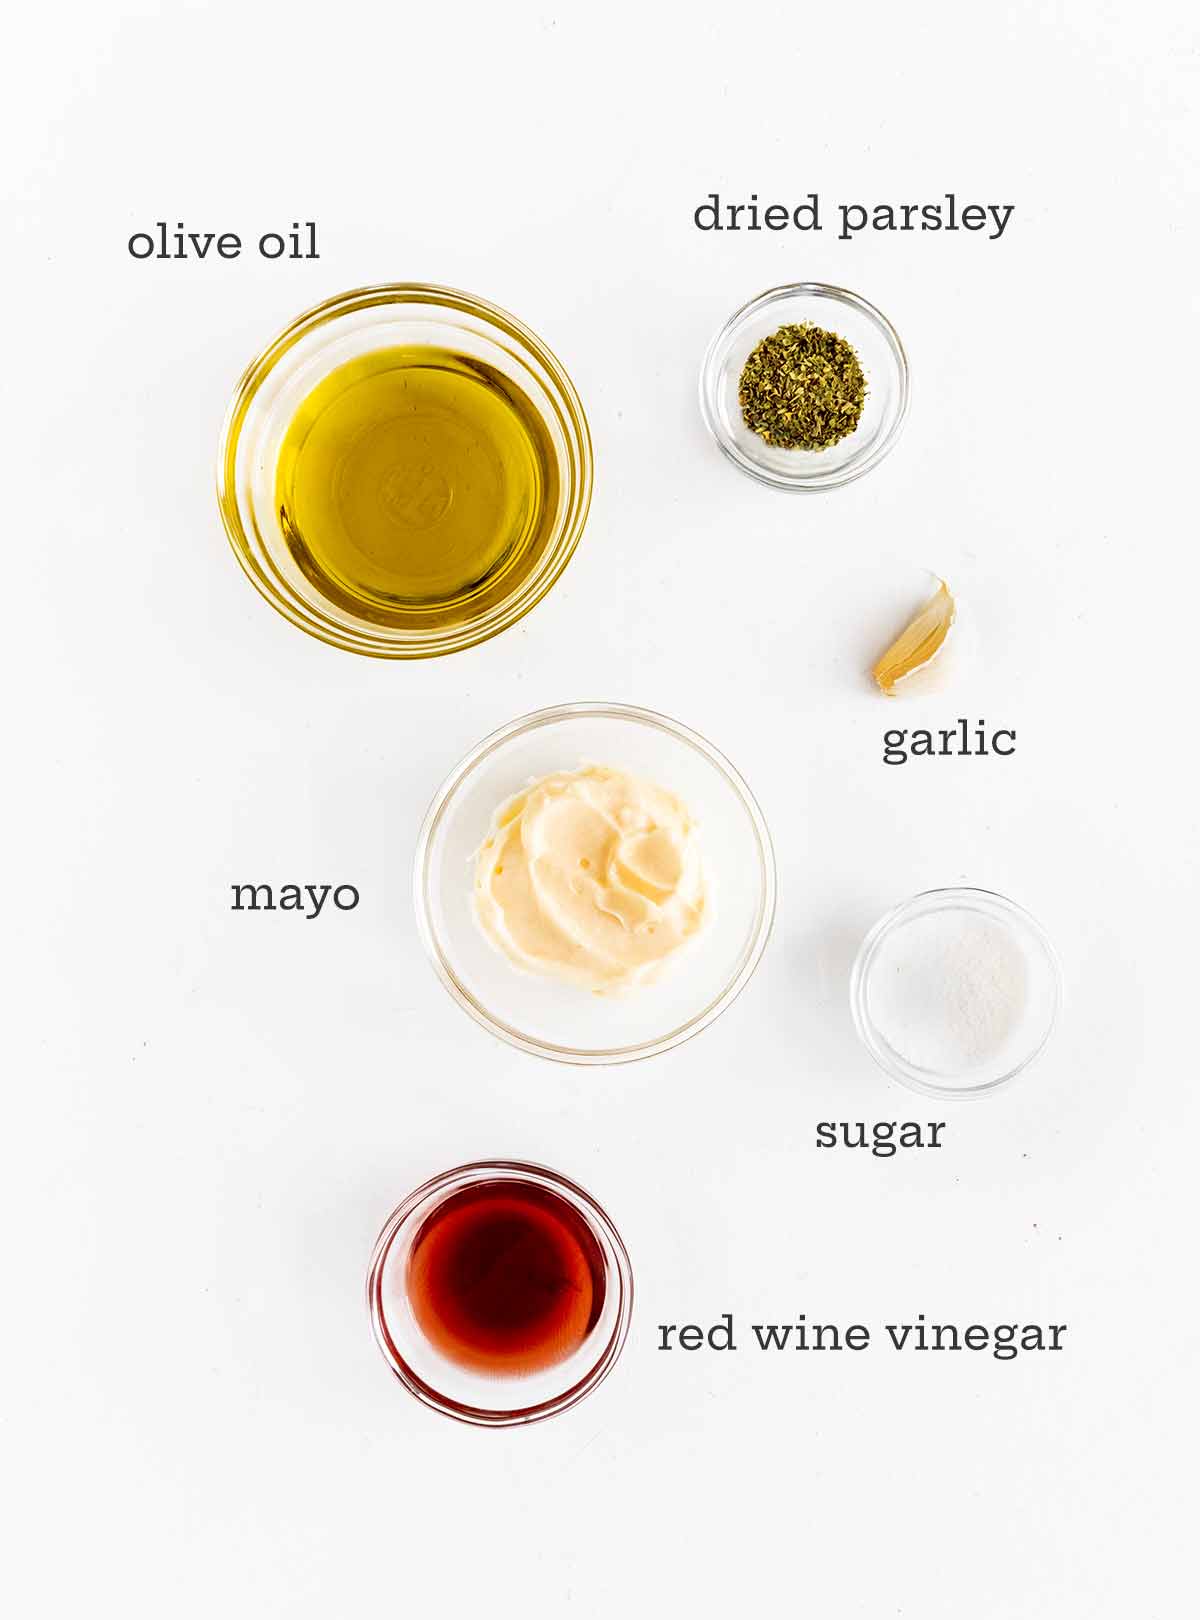 Ingredients for creamy Italian dressing -- olive oil, parsley, mayo, garlic, sugar, and red wine vinegar.